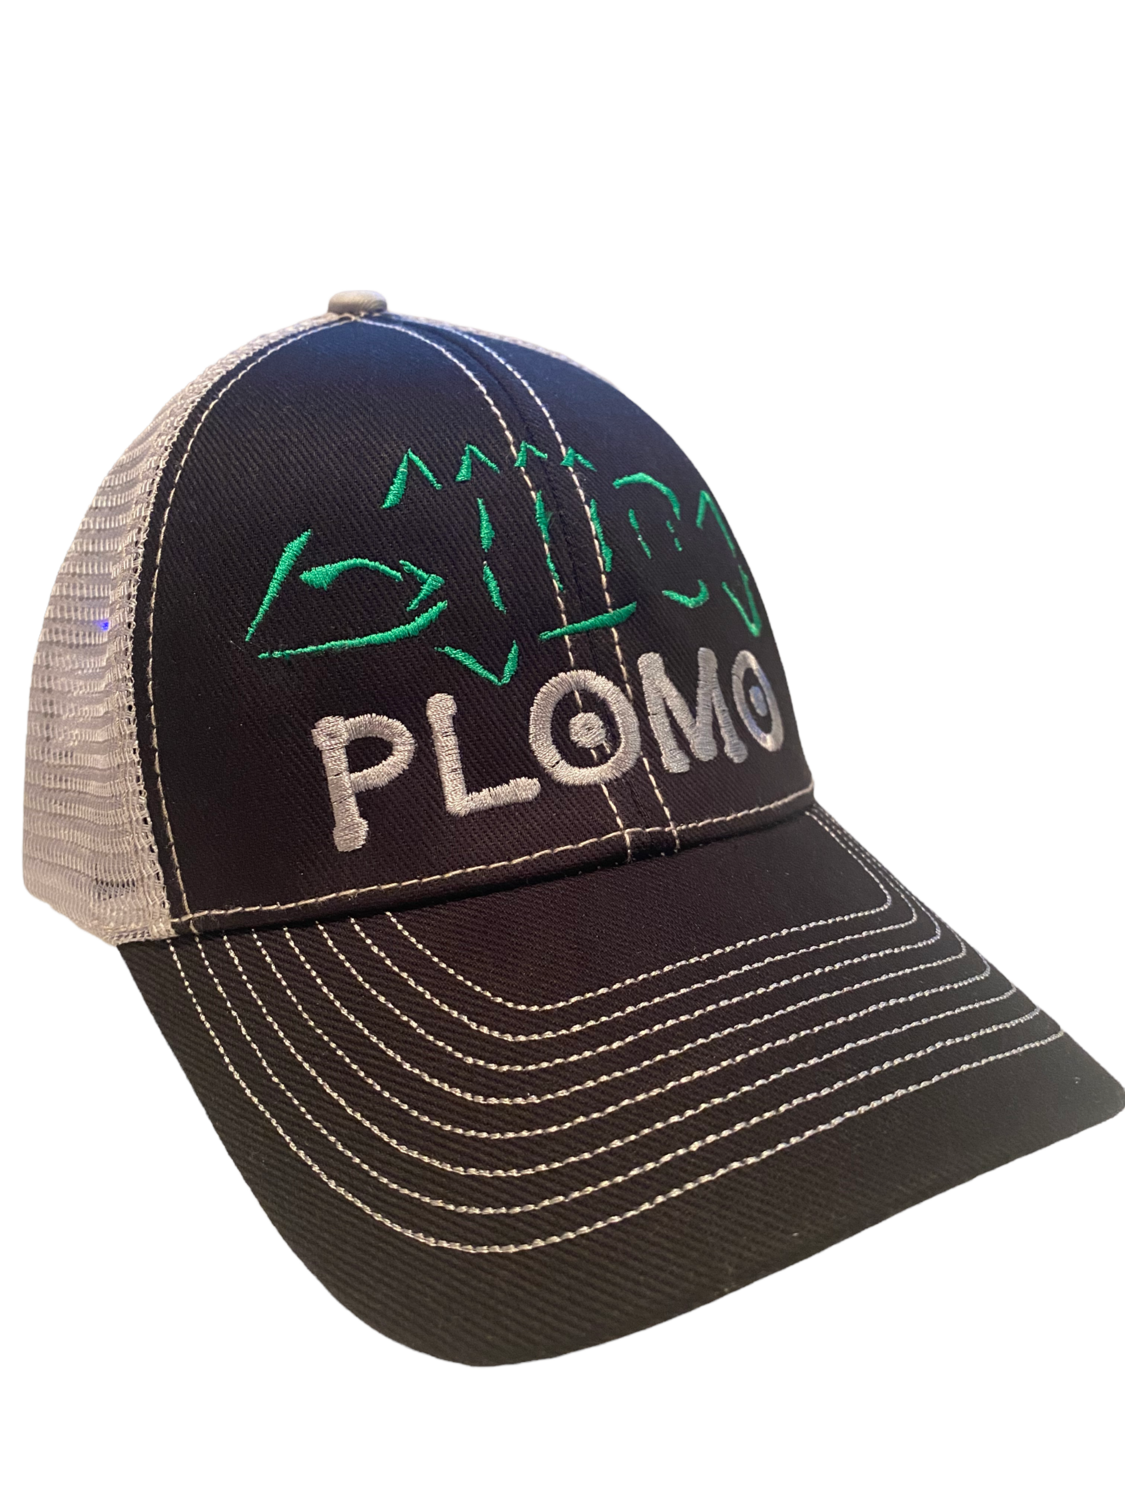 G's Up Fishing Hat "Plomo" Bass Fishing Hat